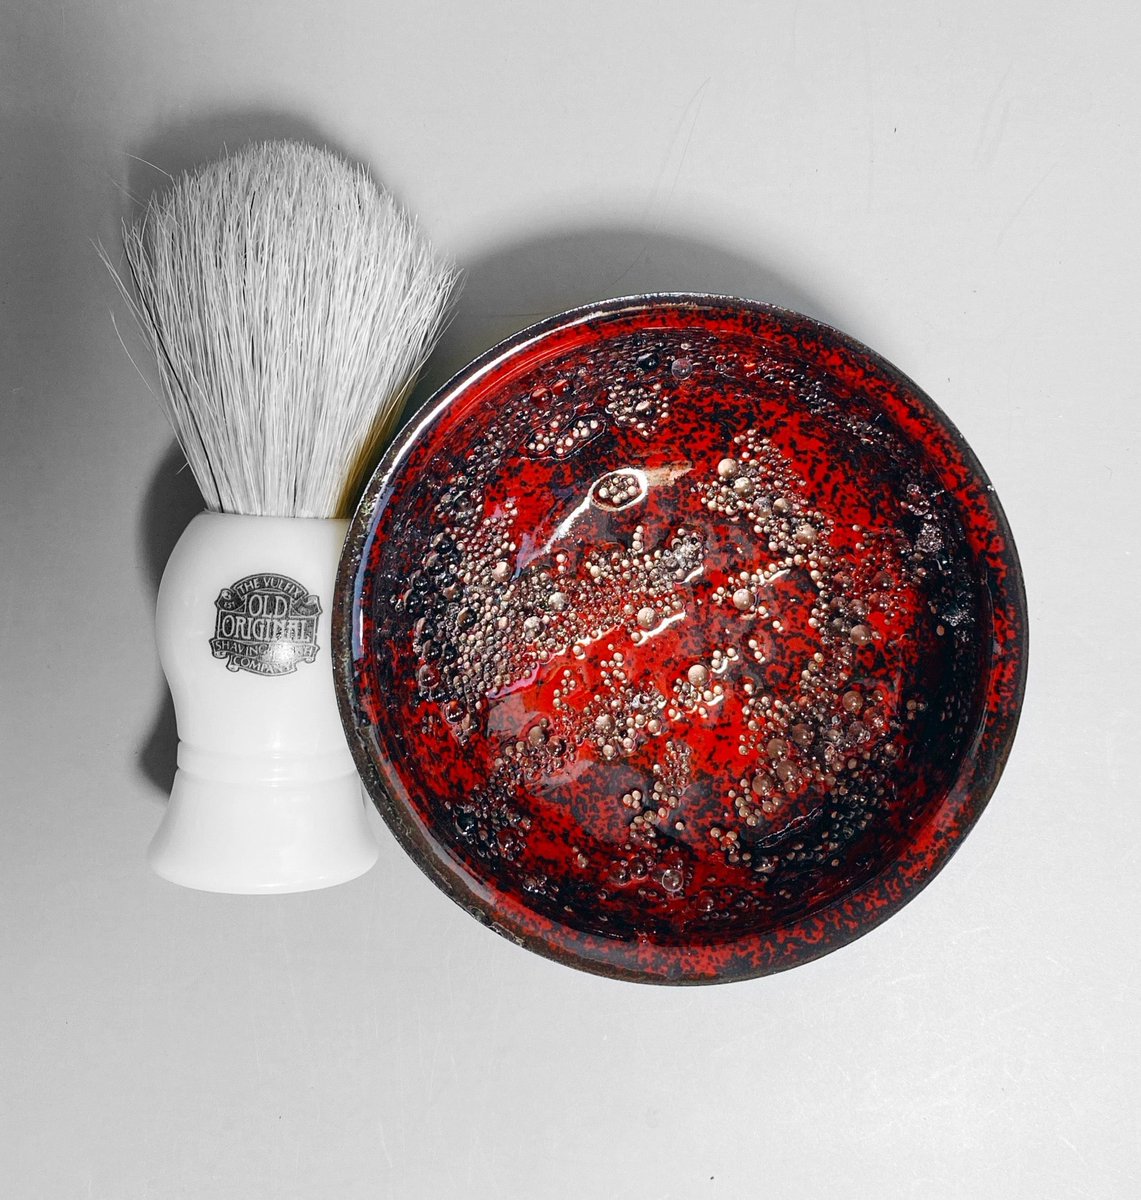 Red Enamel Shaving Bowl tuppu.net/36bfaa01 #giftideas #HandmadeHour #shopsmall #inbizhour #UKHashtags #MHHSBD #bizbubble ##UKGiftHour #ShavingBowl